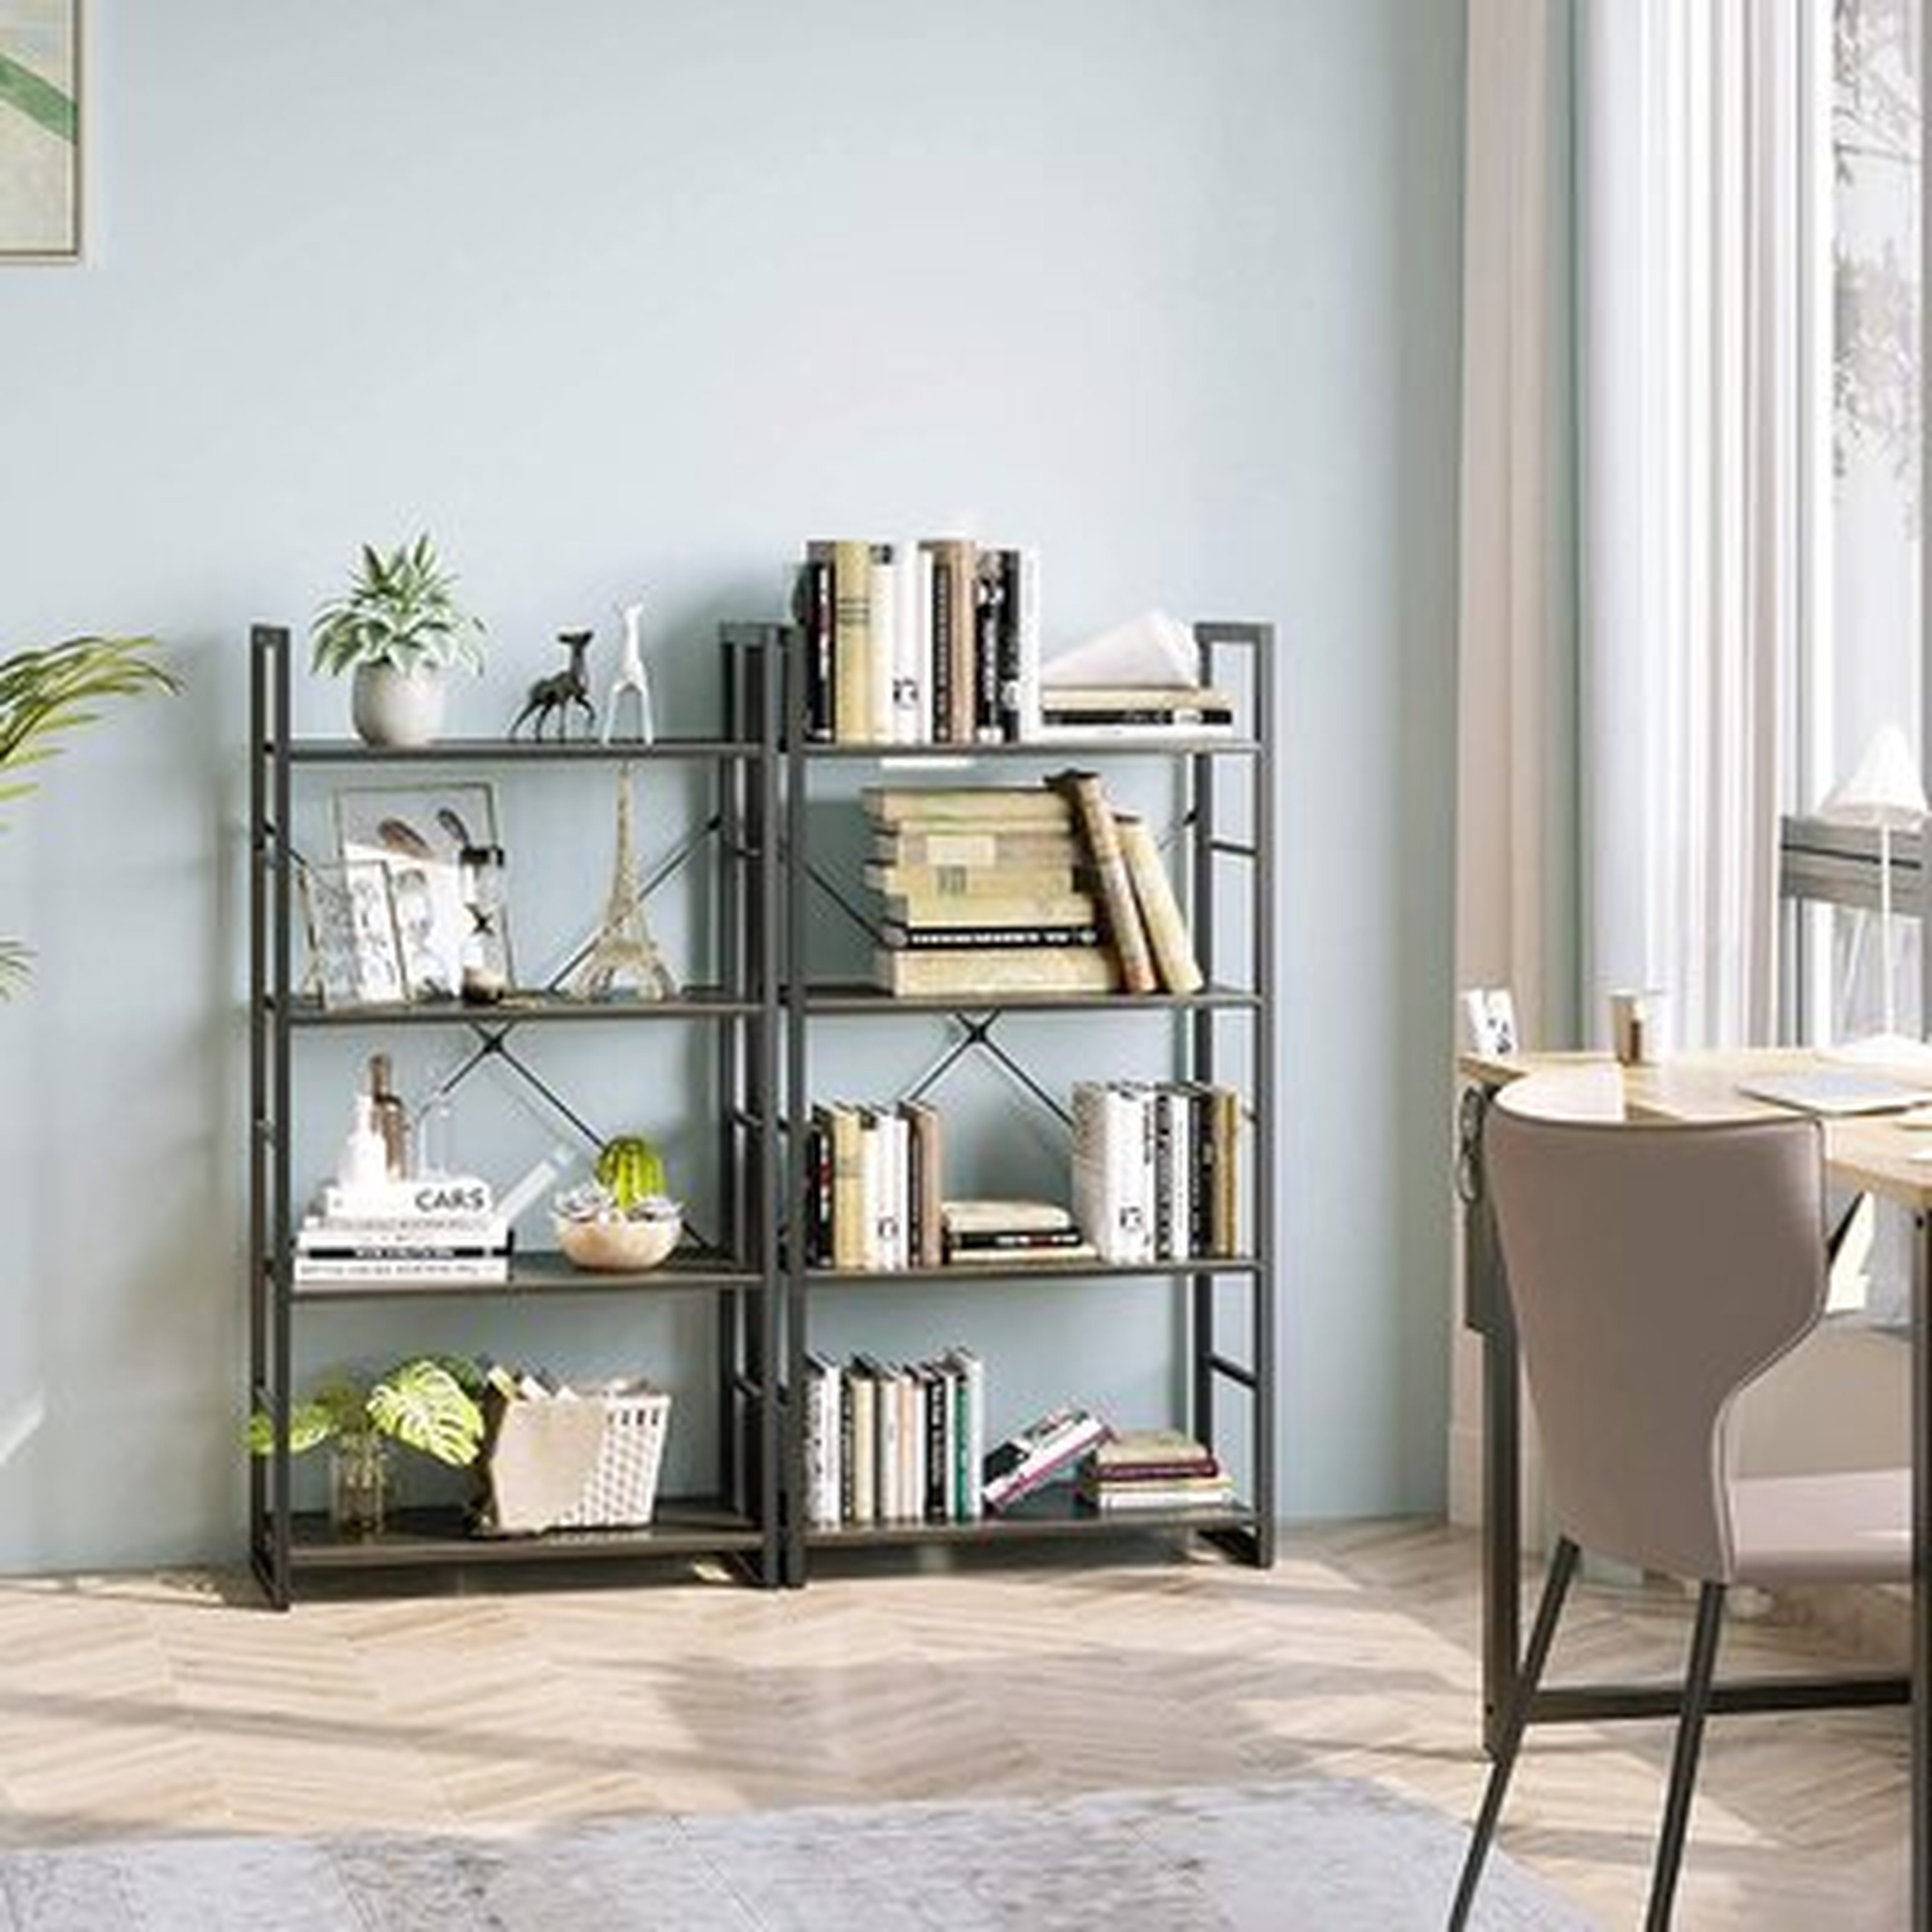 4 Tier Bookshelf, Tall Bookcase Shelf Storage Organizer, Modern Book Shelf For Bedroom, Living Room And Home Office, Black - Wayfair